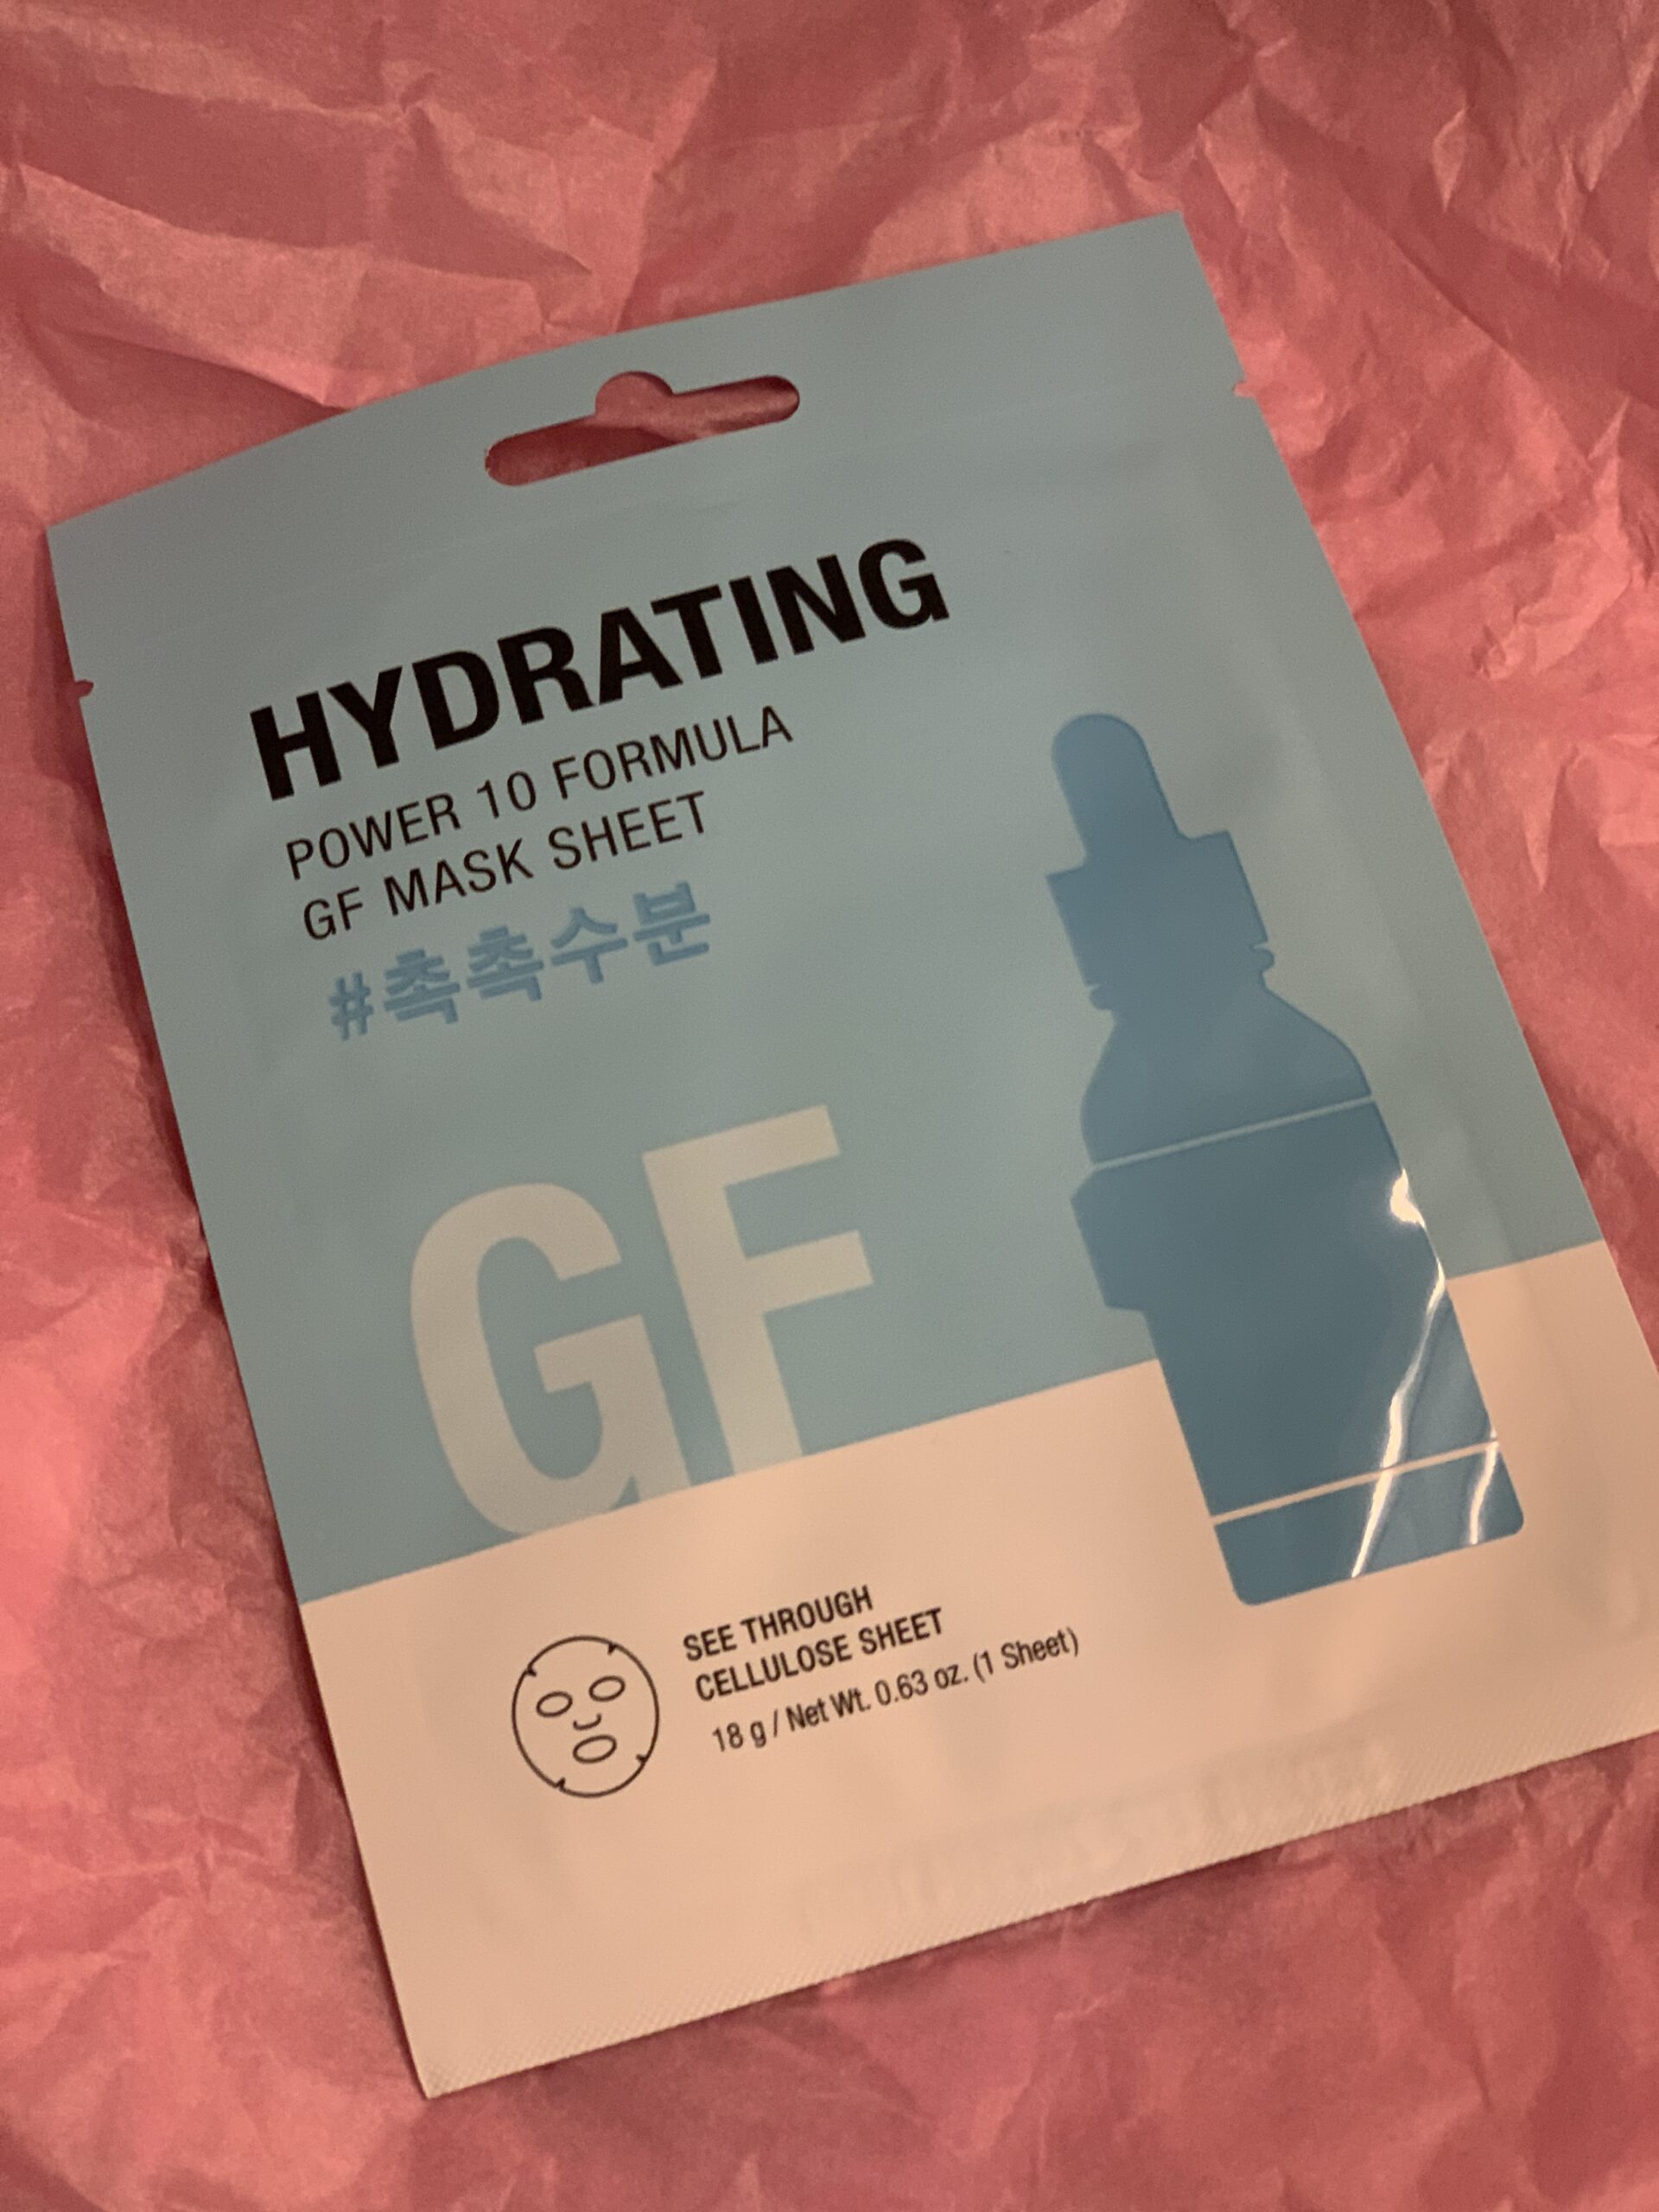 It's Skin hydrating power 10 formula